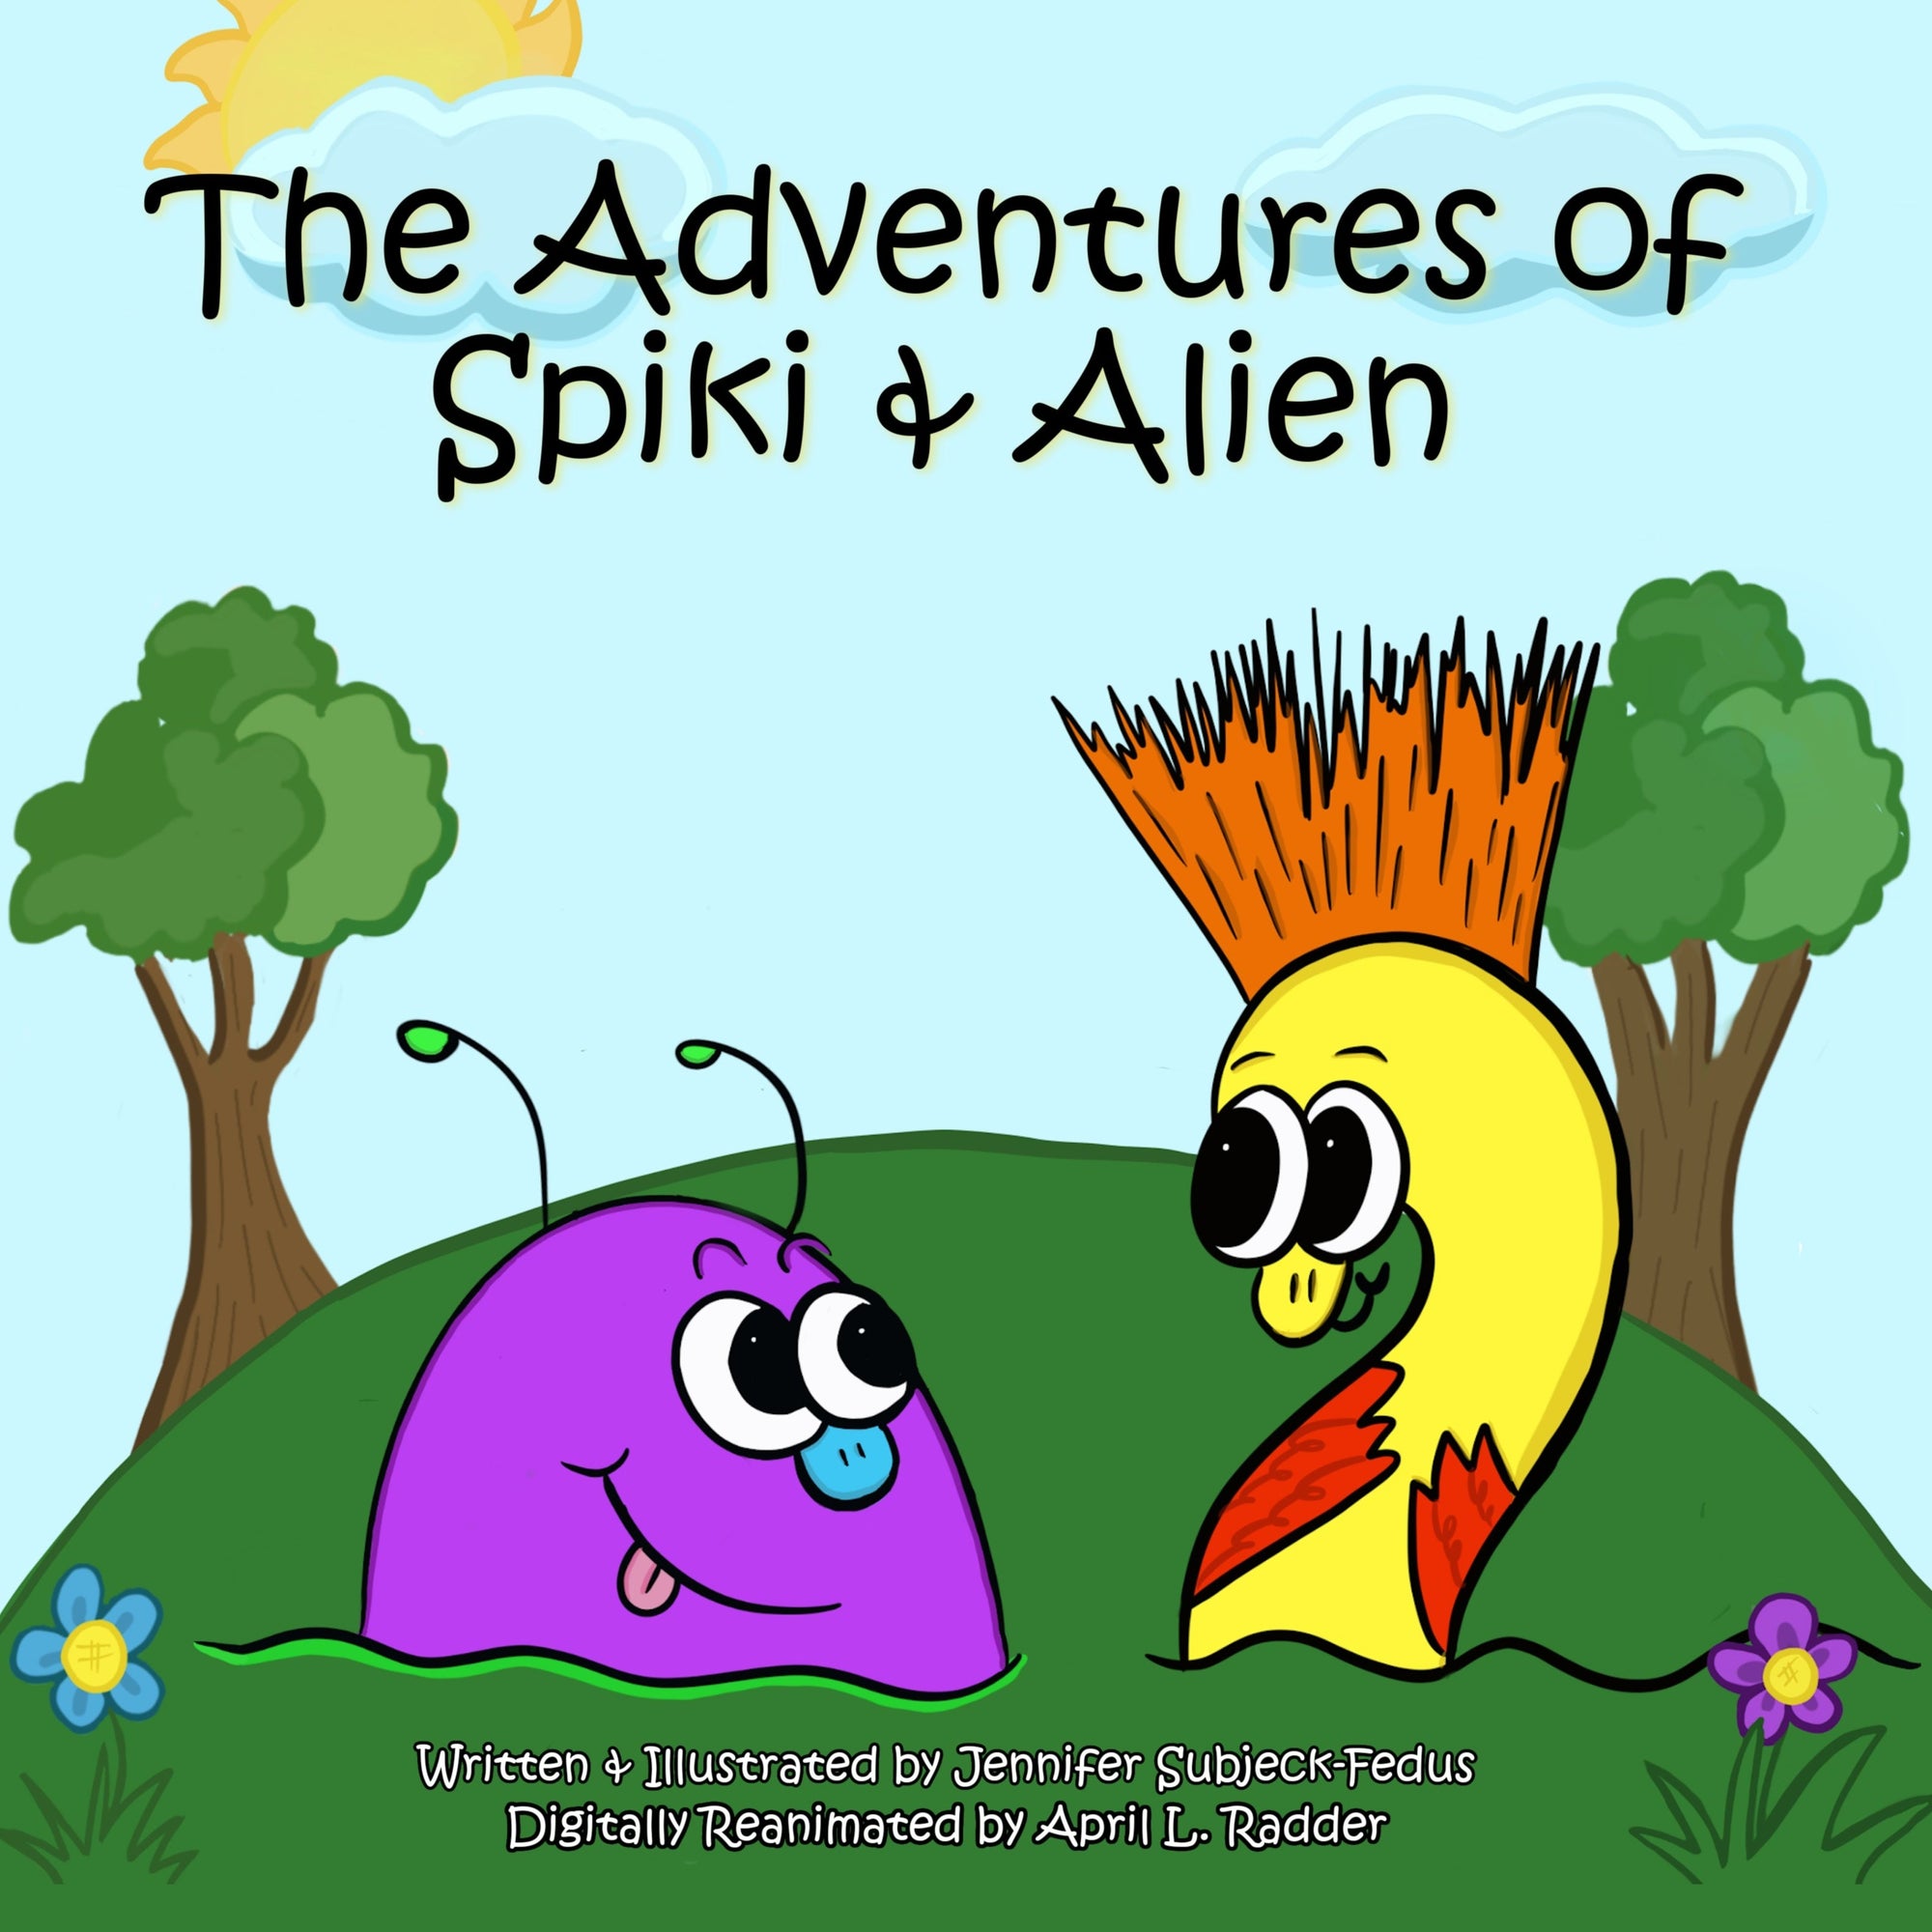 The Adventures of Spiki & Alien